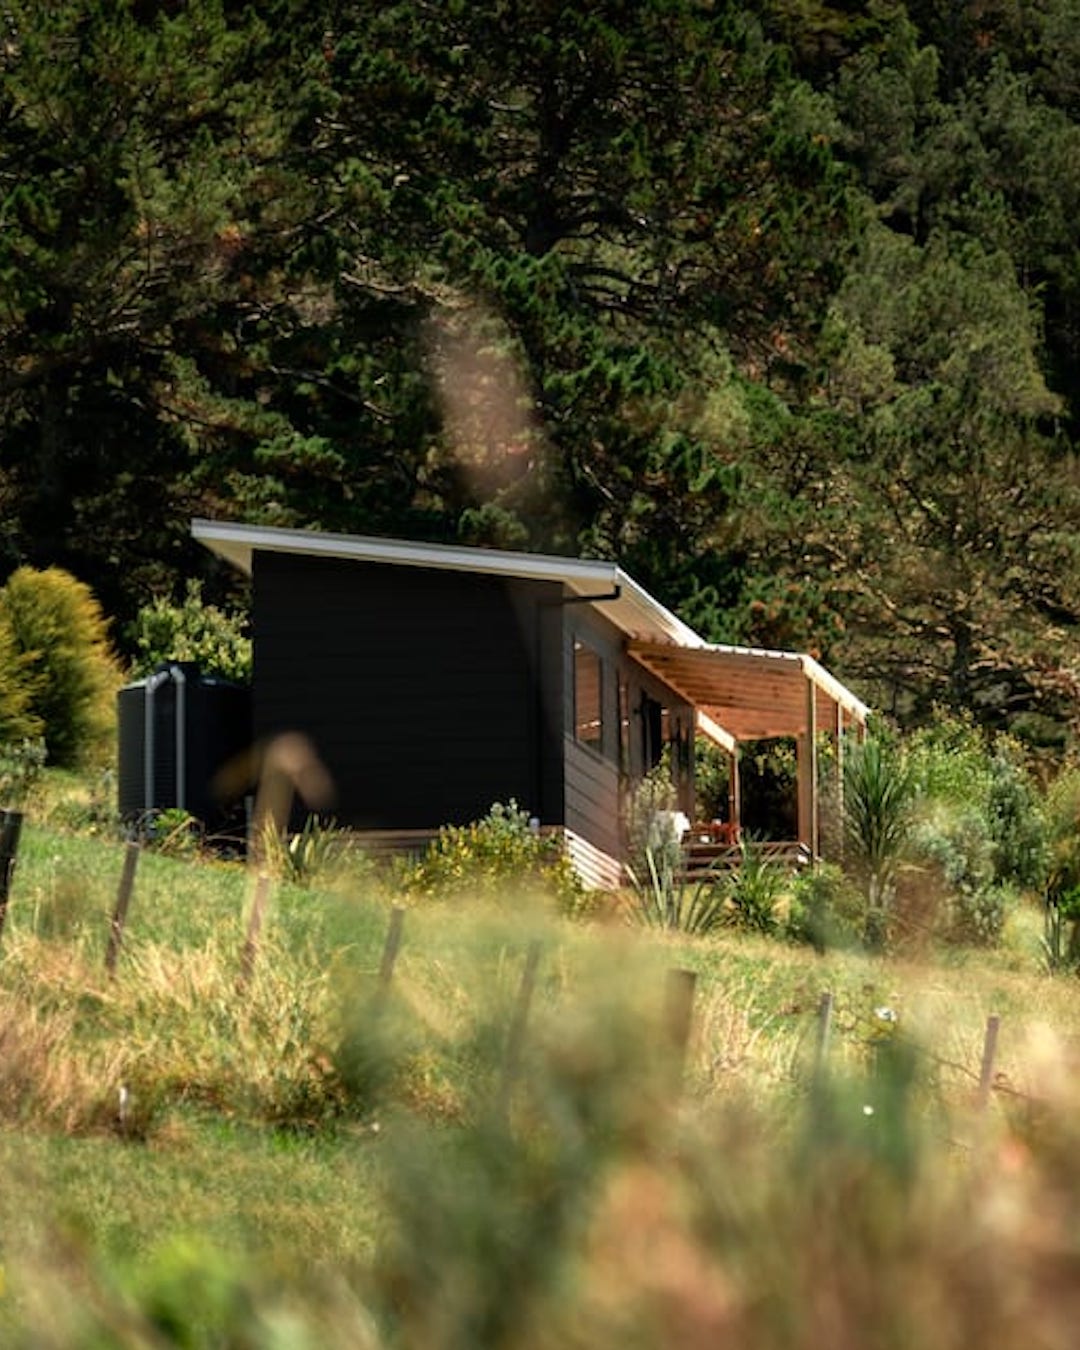 A small cabin on a lush hillside